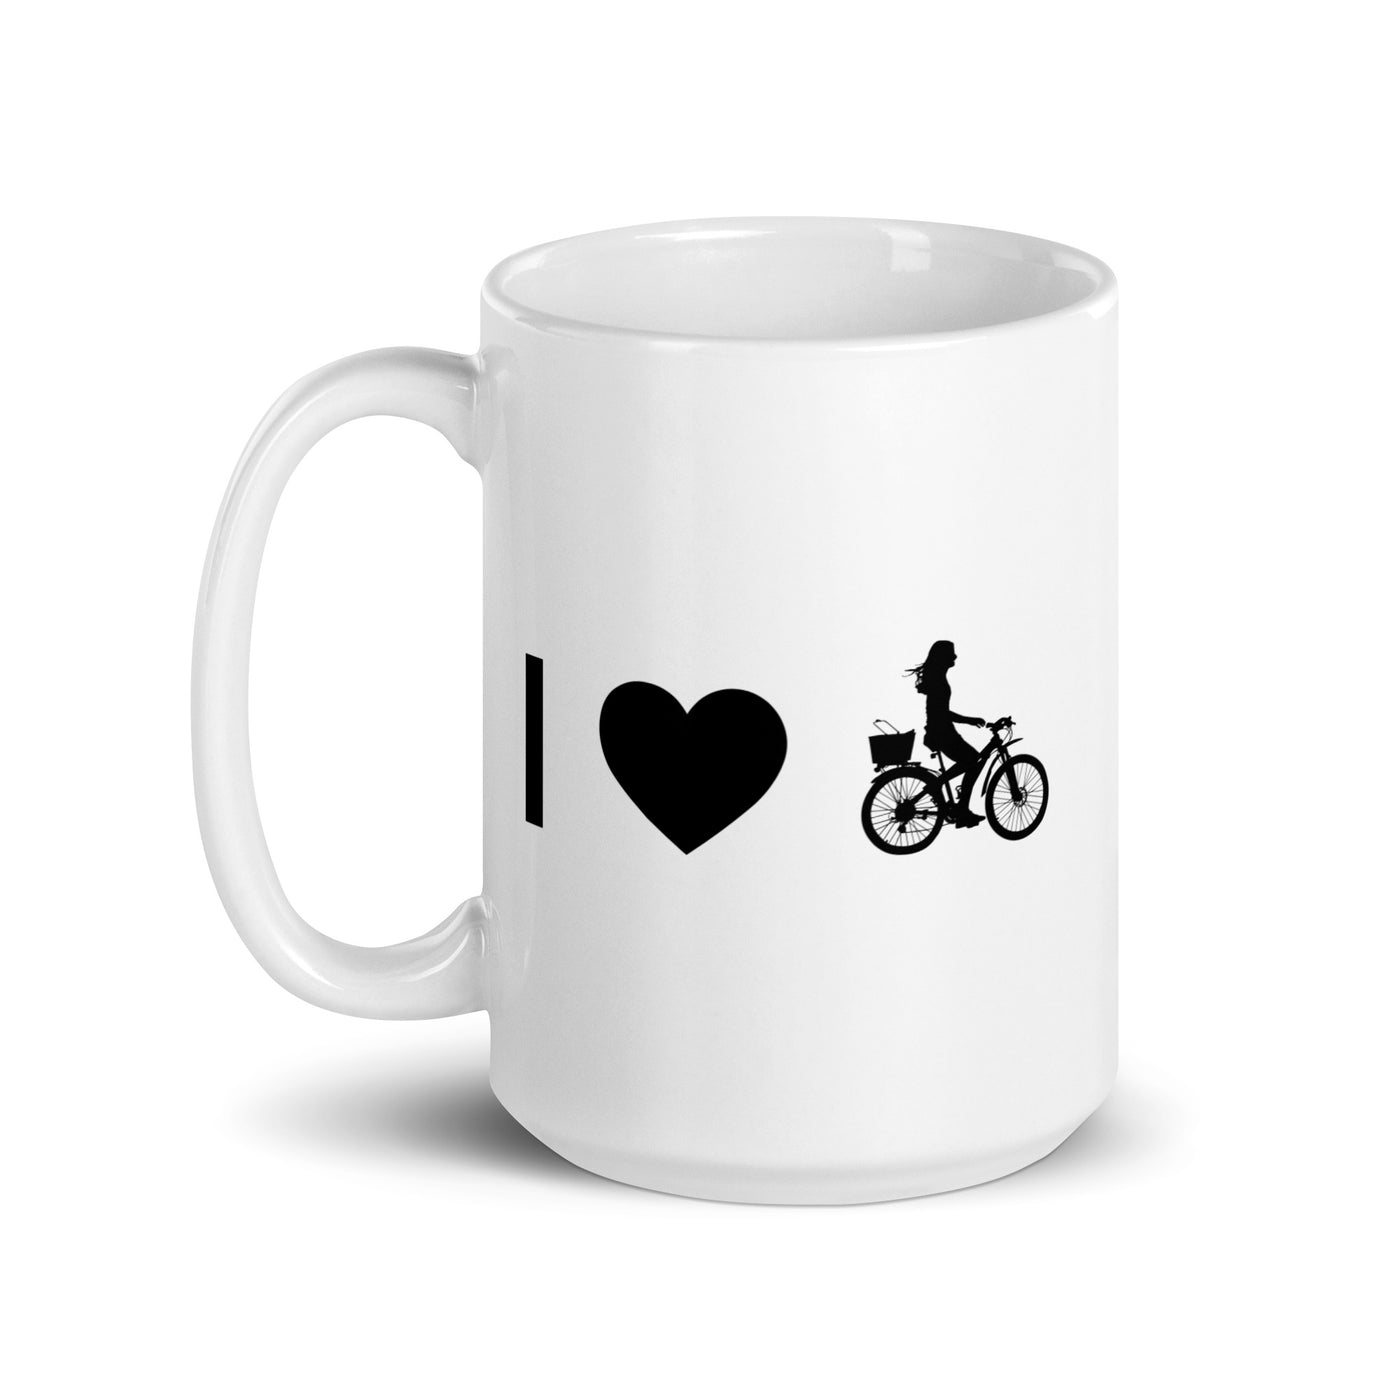 I Heart And Female Cycling - Tasse fahrrad